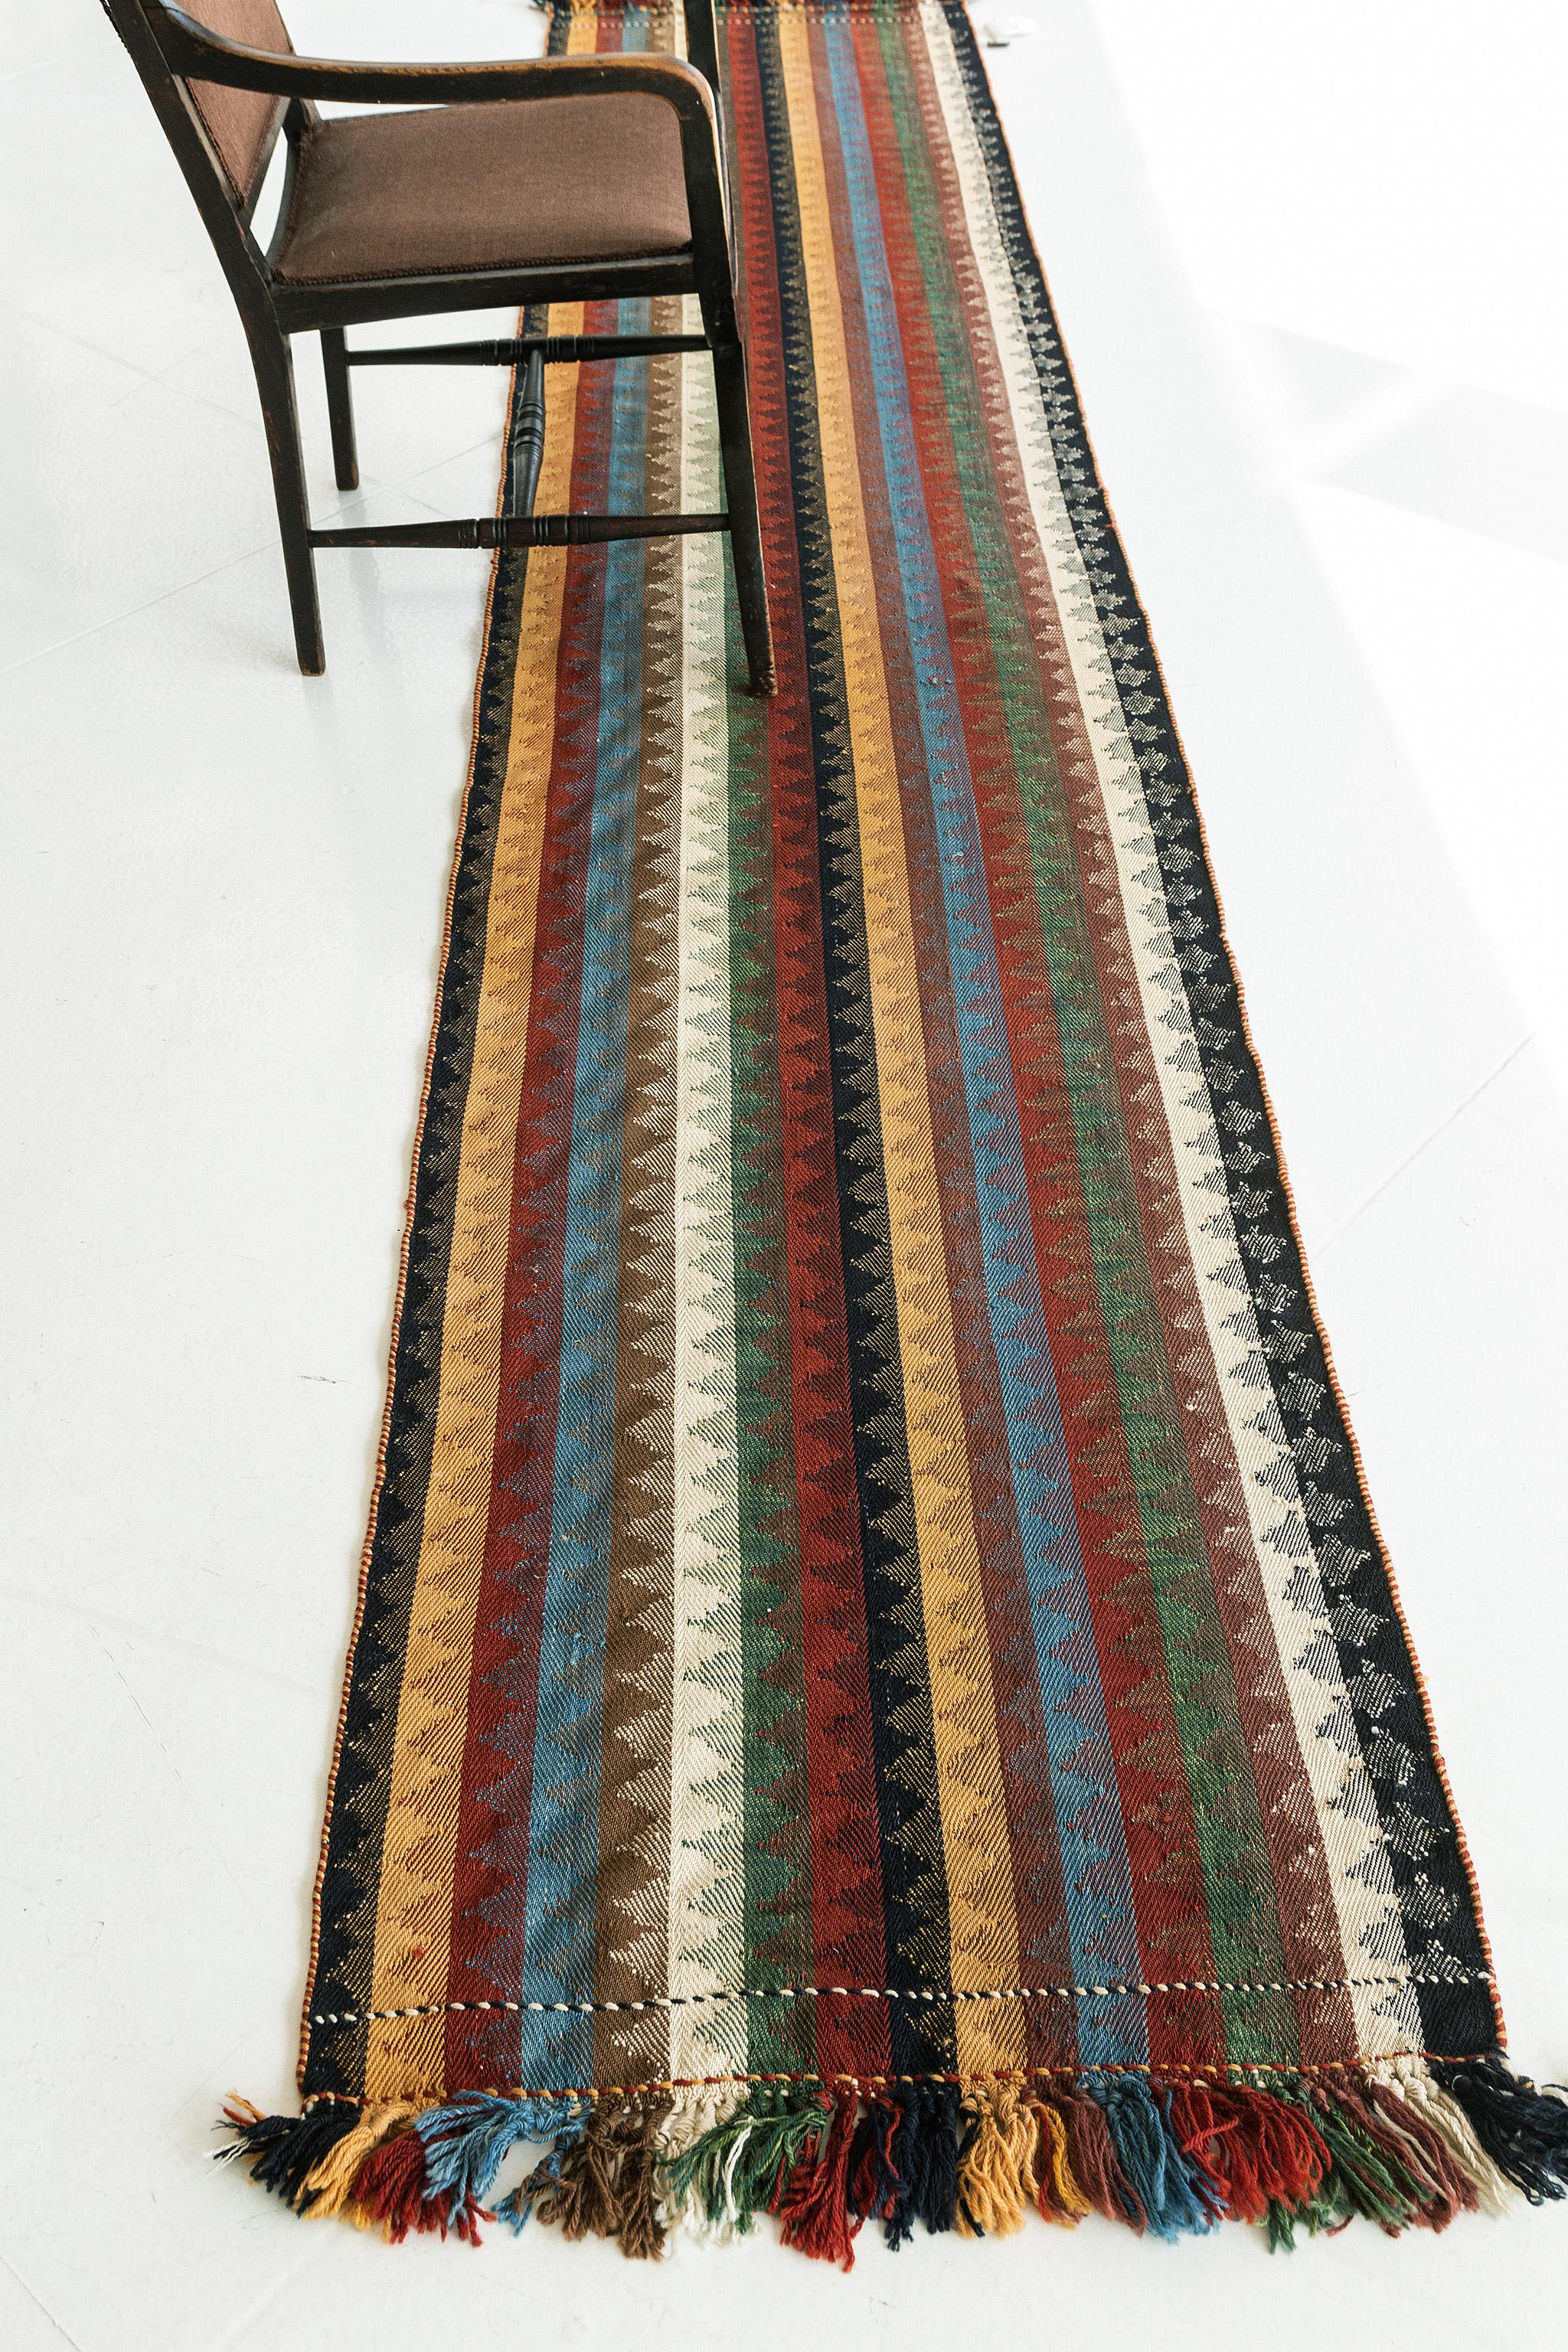 Contemporary Persian Jajim Flat Weave Kilim 58856 For Sale